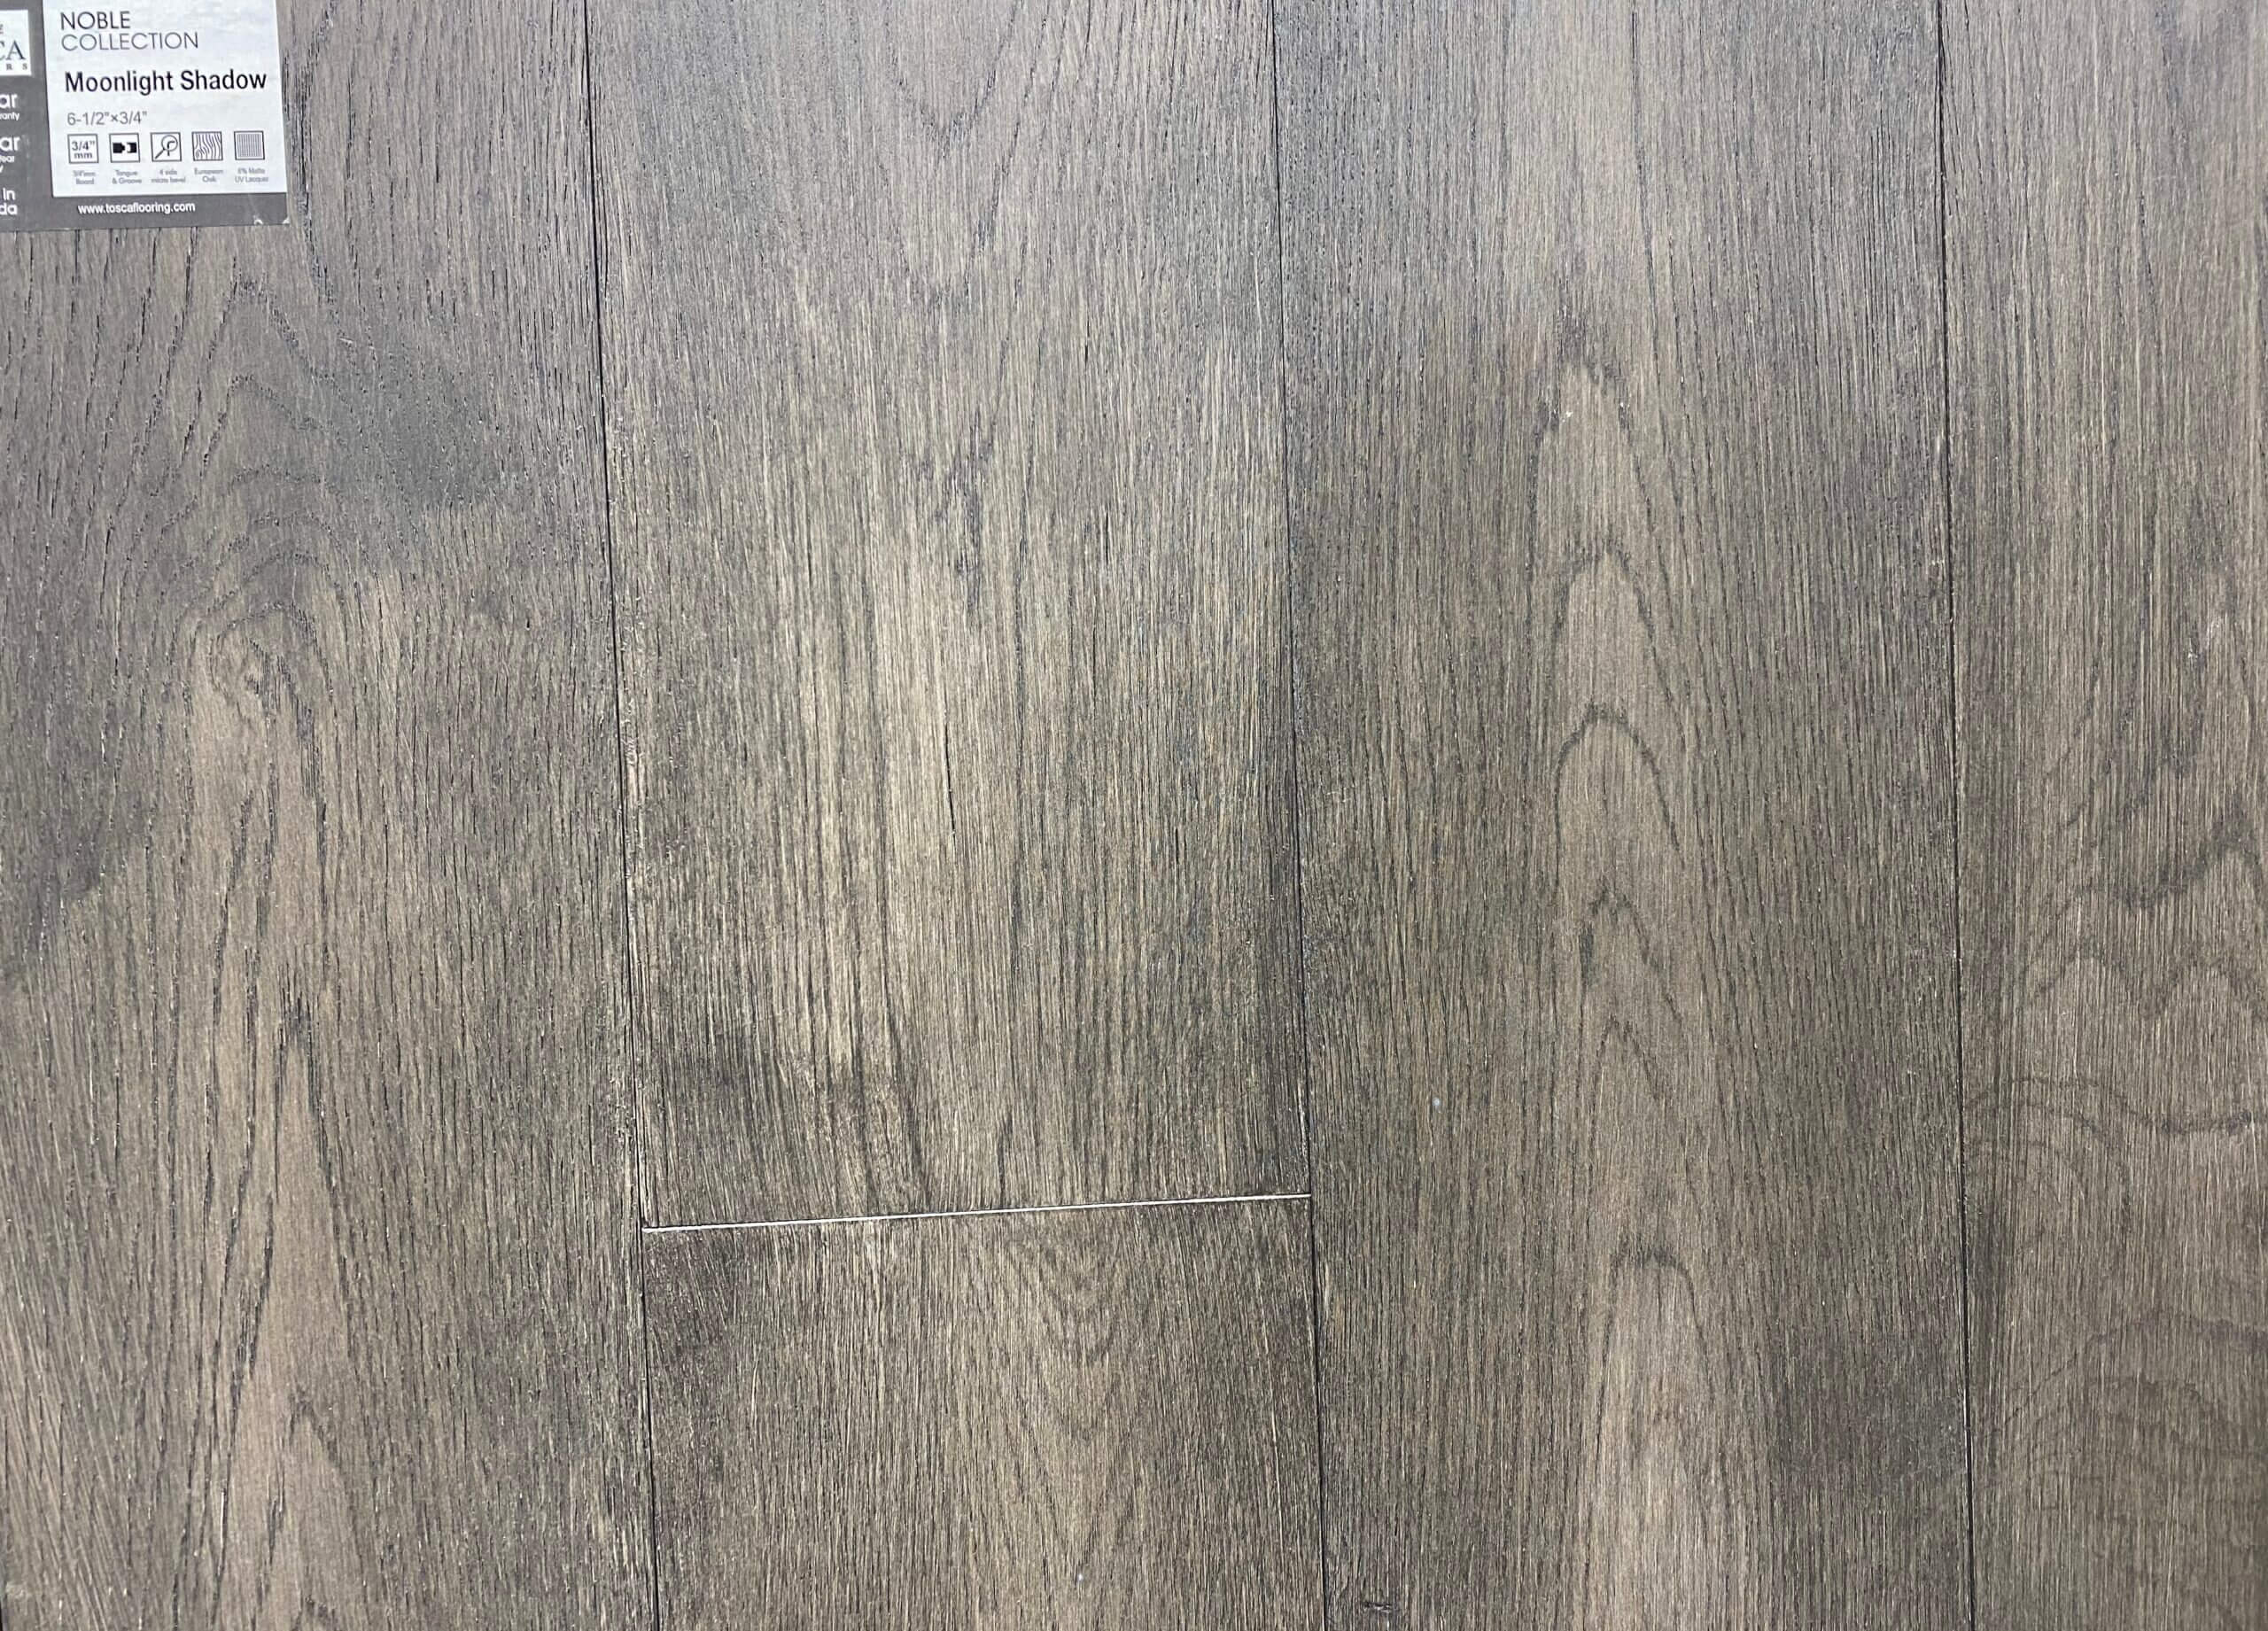 Tosca Engineered Flooring Noble Collection Moonlight Shadow 6″x 3/2″ mm 20.247 sqft/box